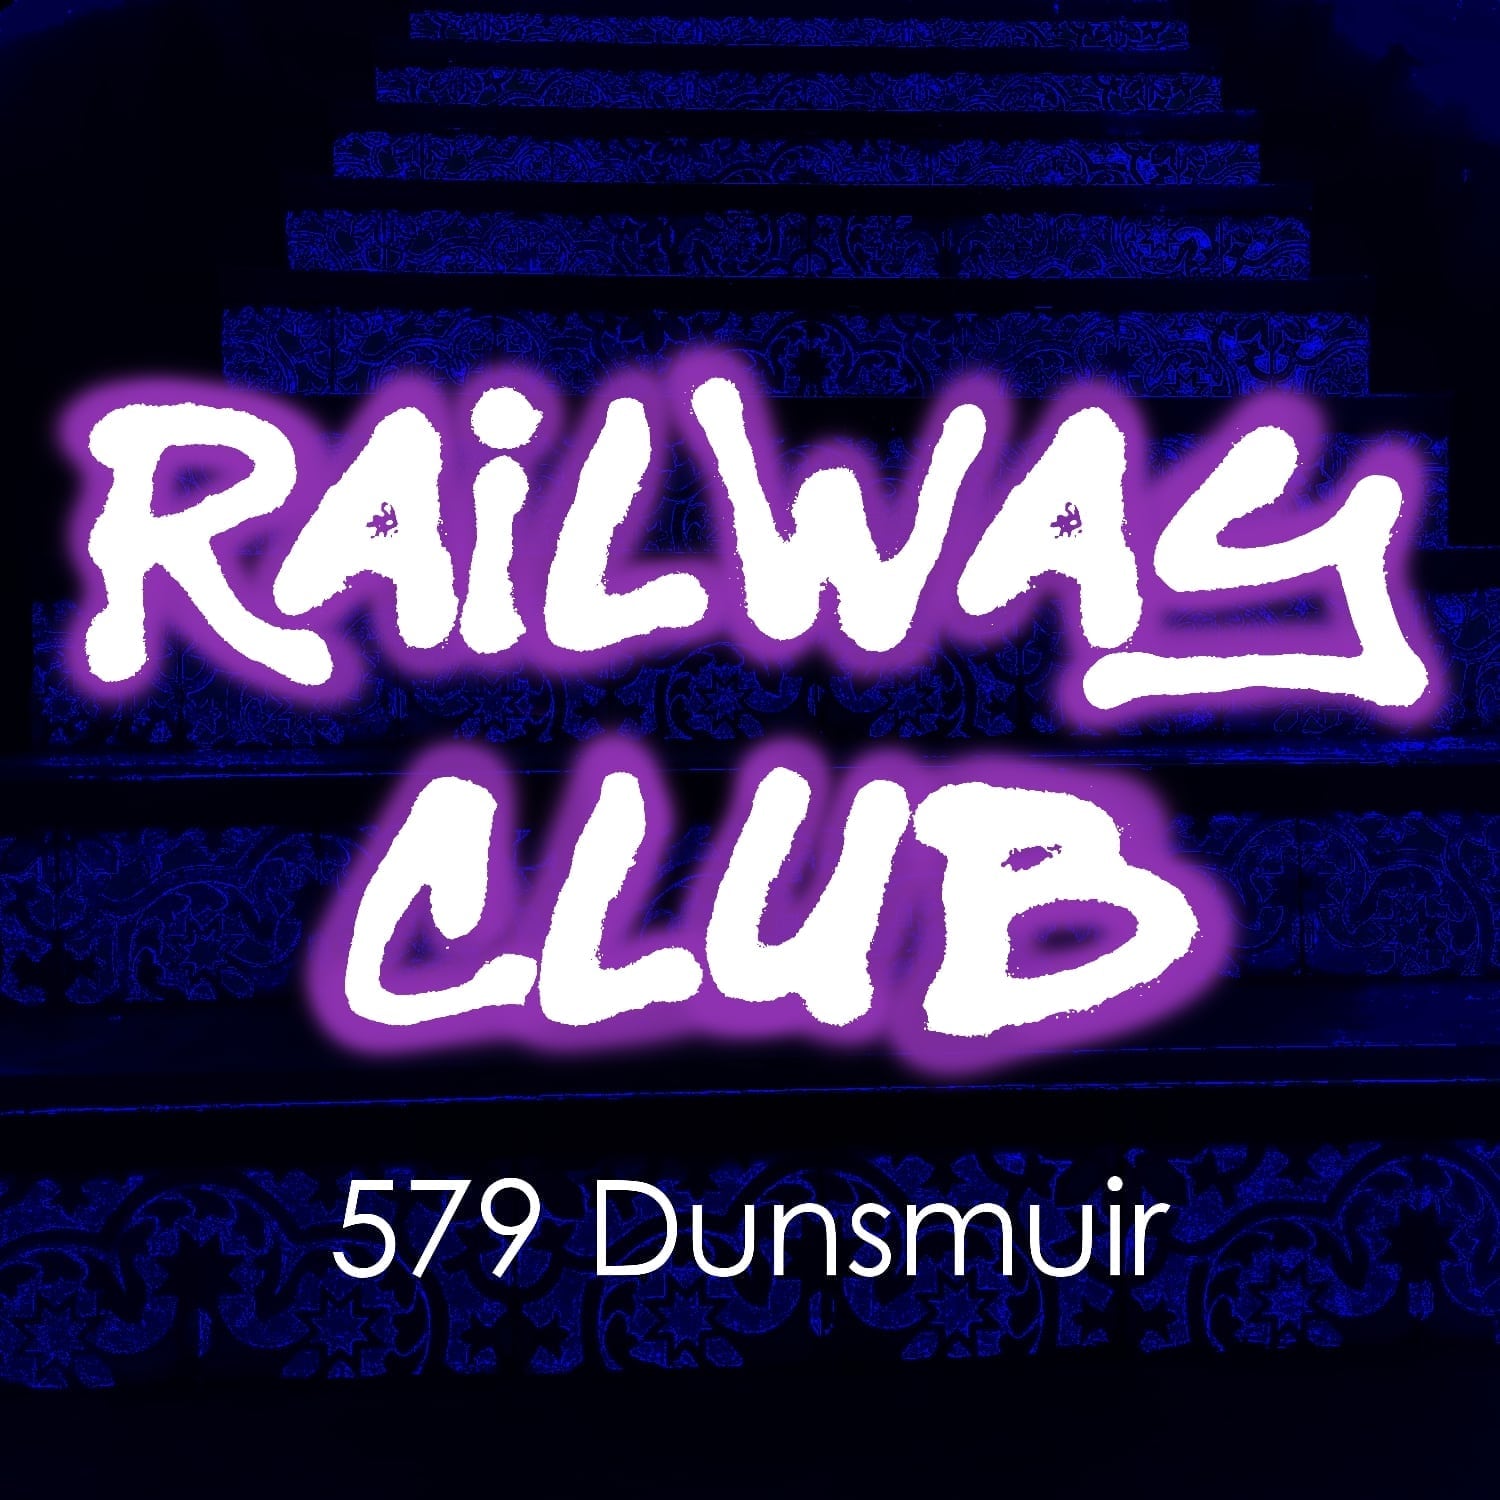 The Railway Club